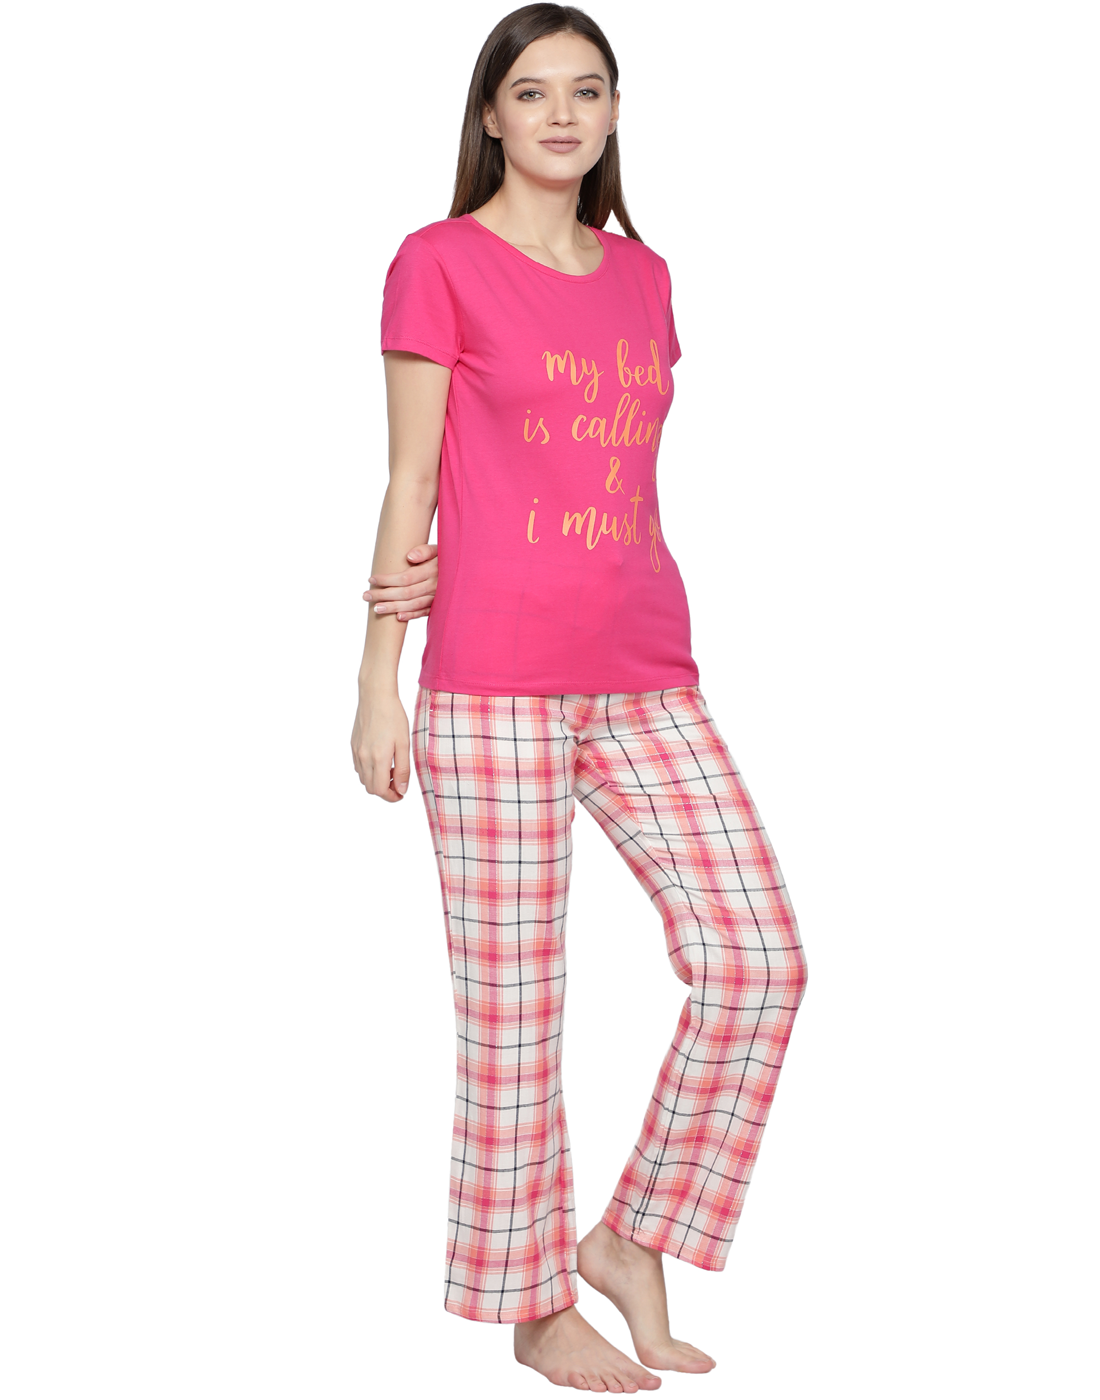 Pyjama Set for Women-White & Pink Checked